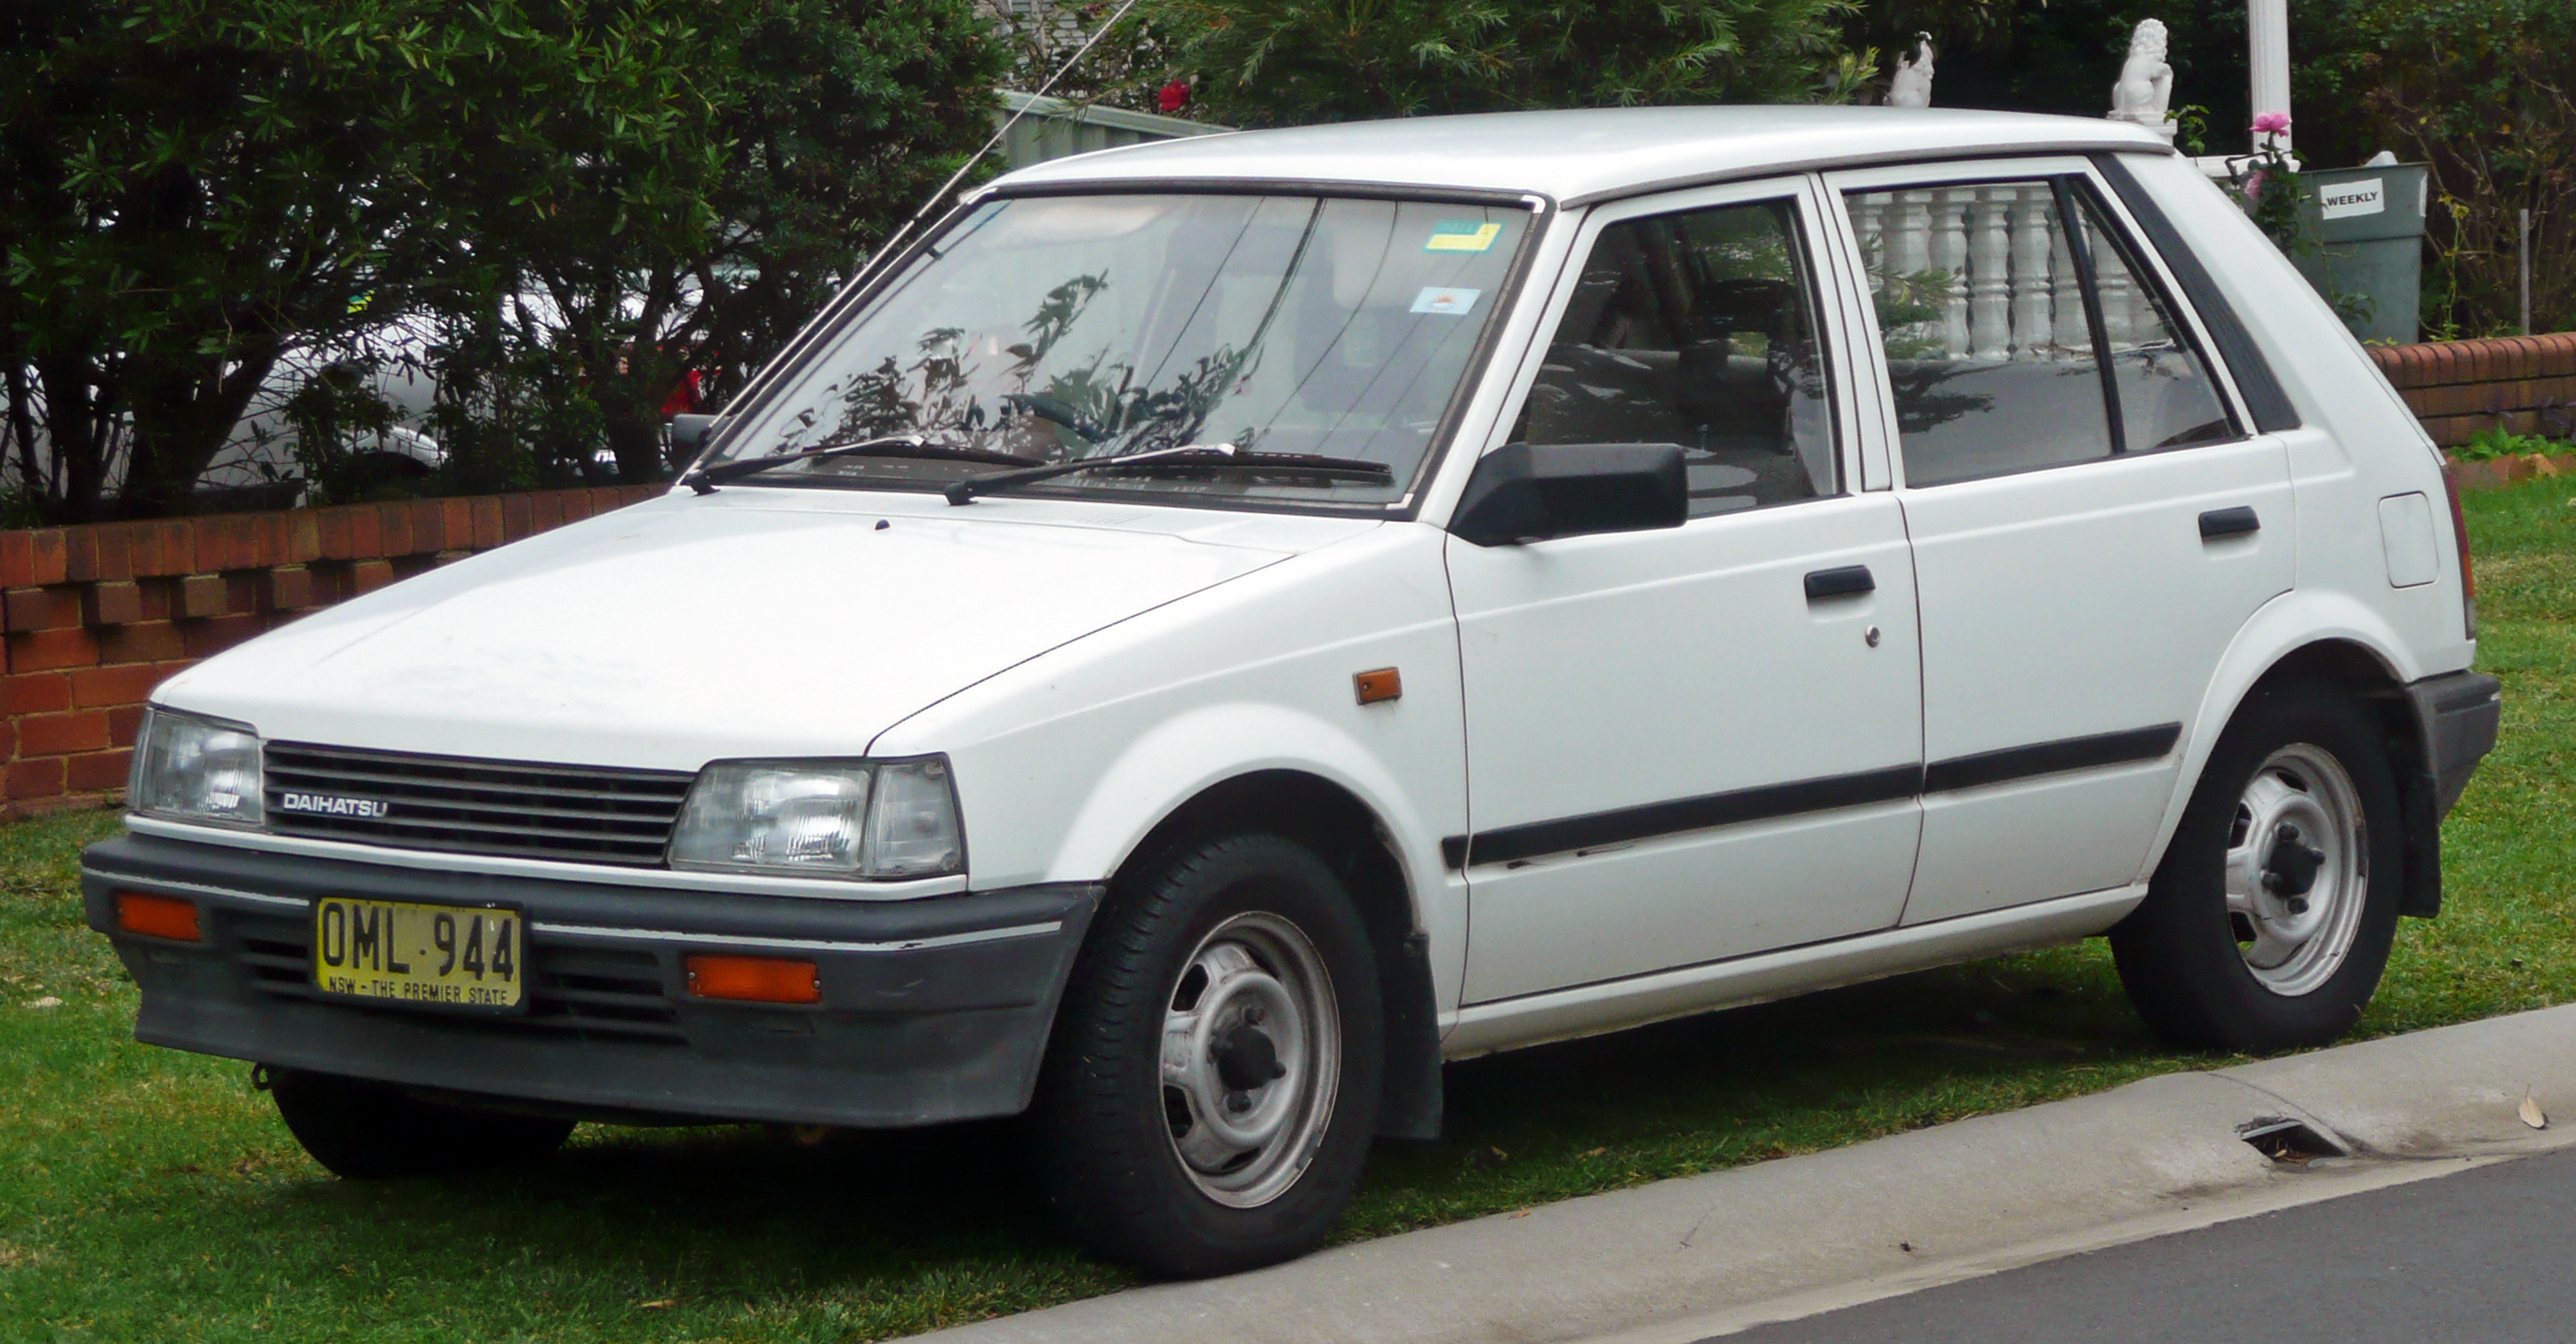 File:1985-1987 Daihatsu Charade (G11) CX 5-door hatchback 01.jpg ...